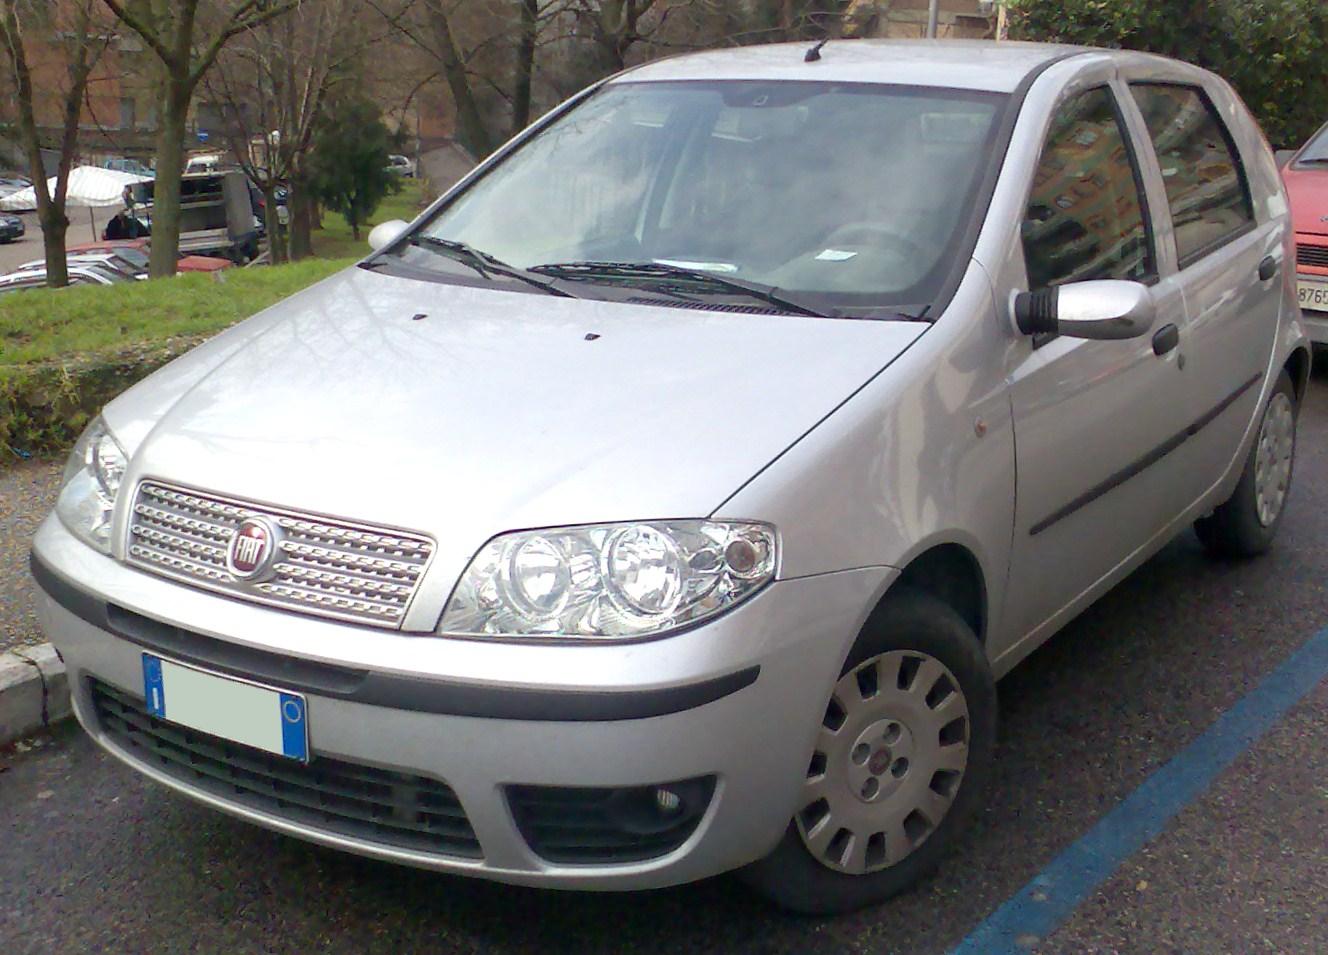 File:2010 Fiat Punto Classic.jpg - Wikimedia Commons